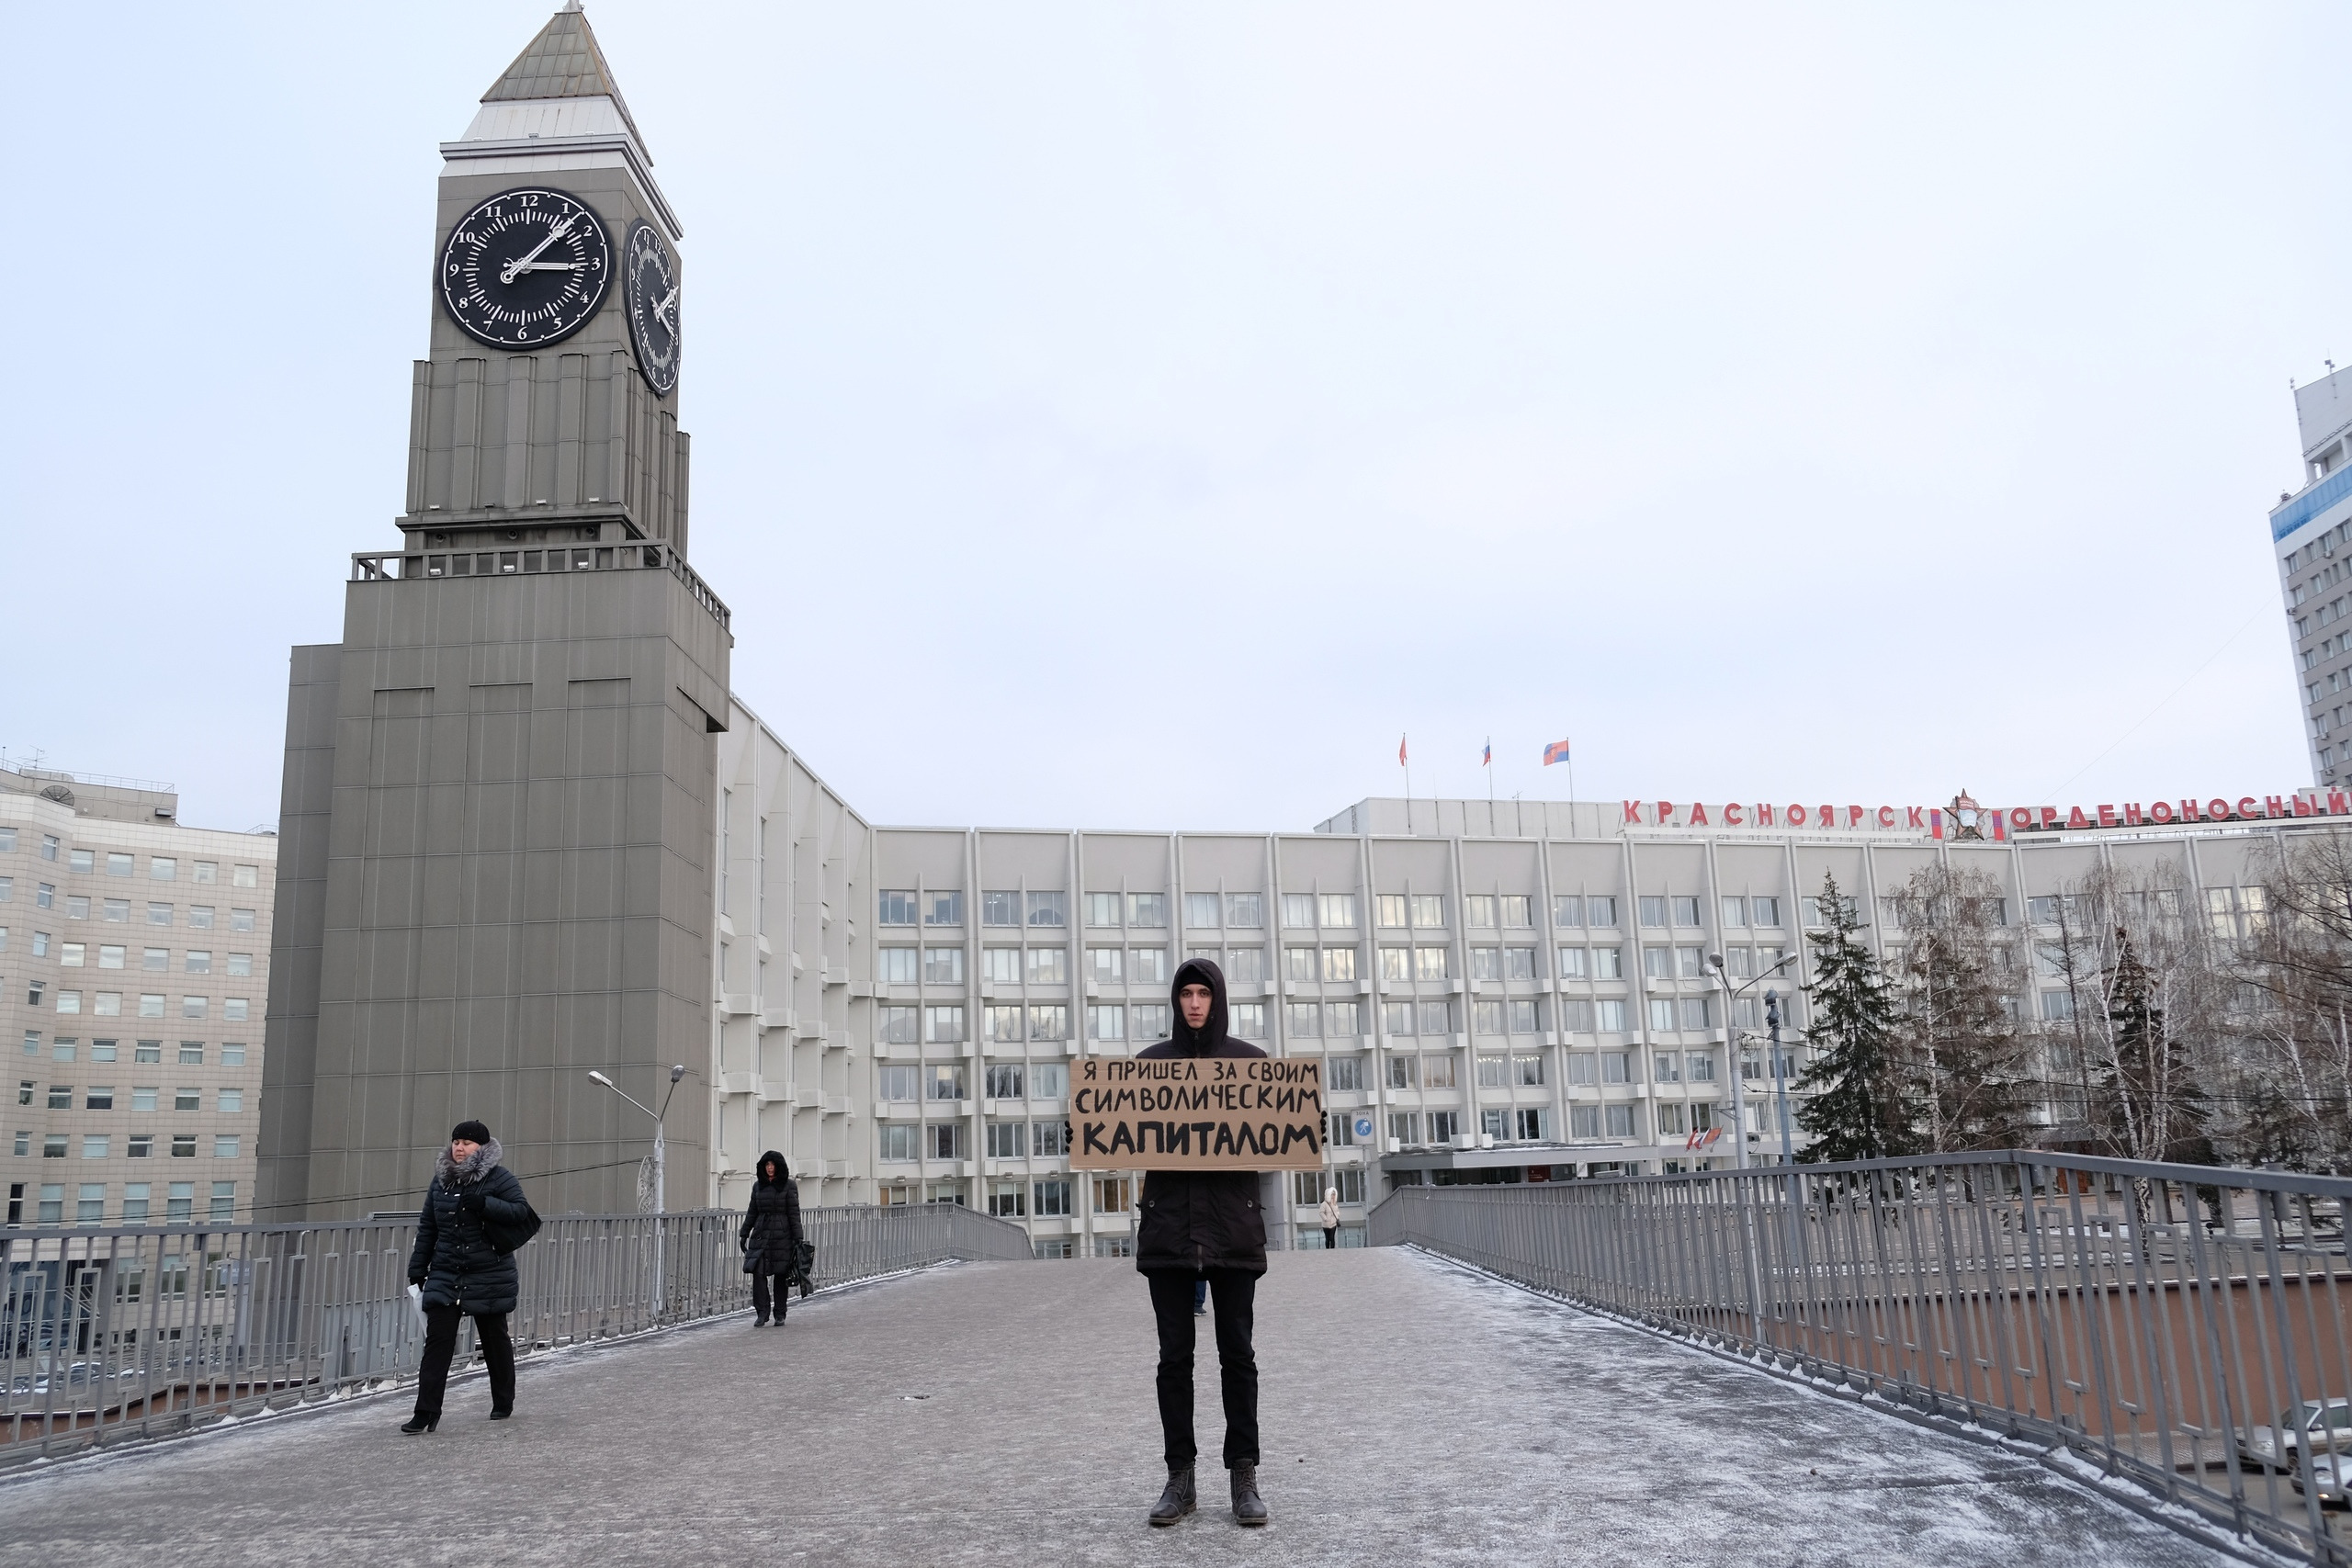 I Came Here for My Symbolic Capital, 2019. From the Single Picket series, Krasnoyarsk